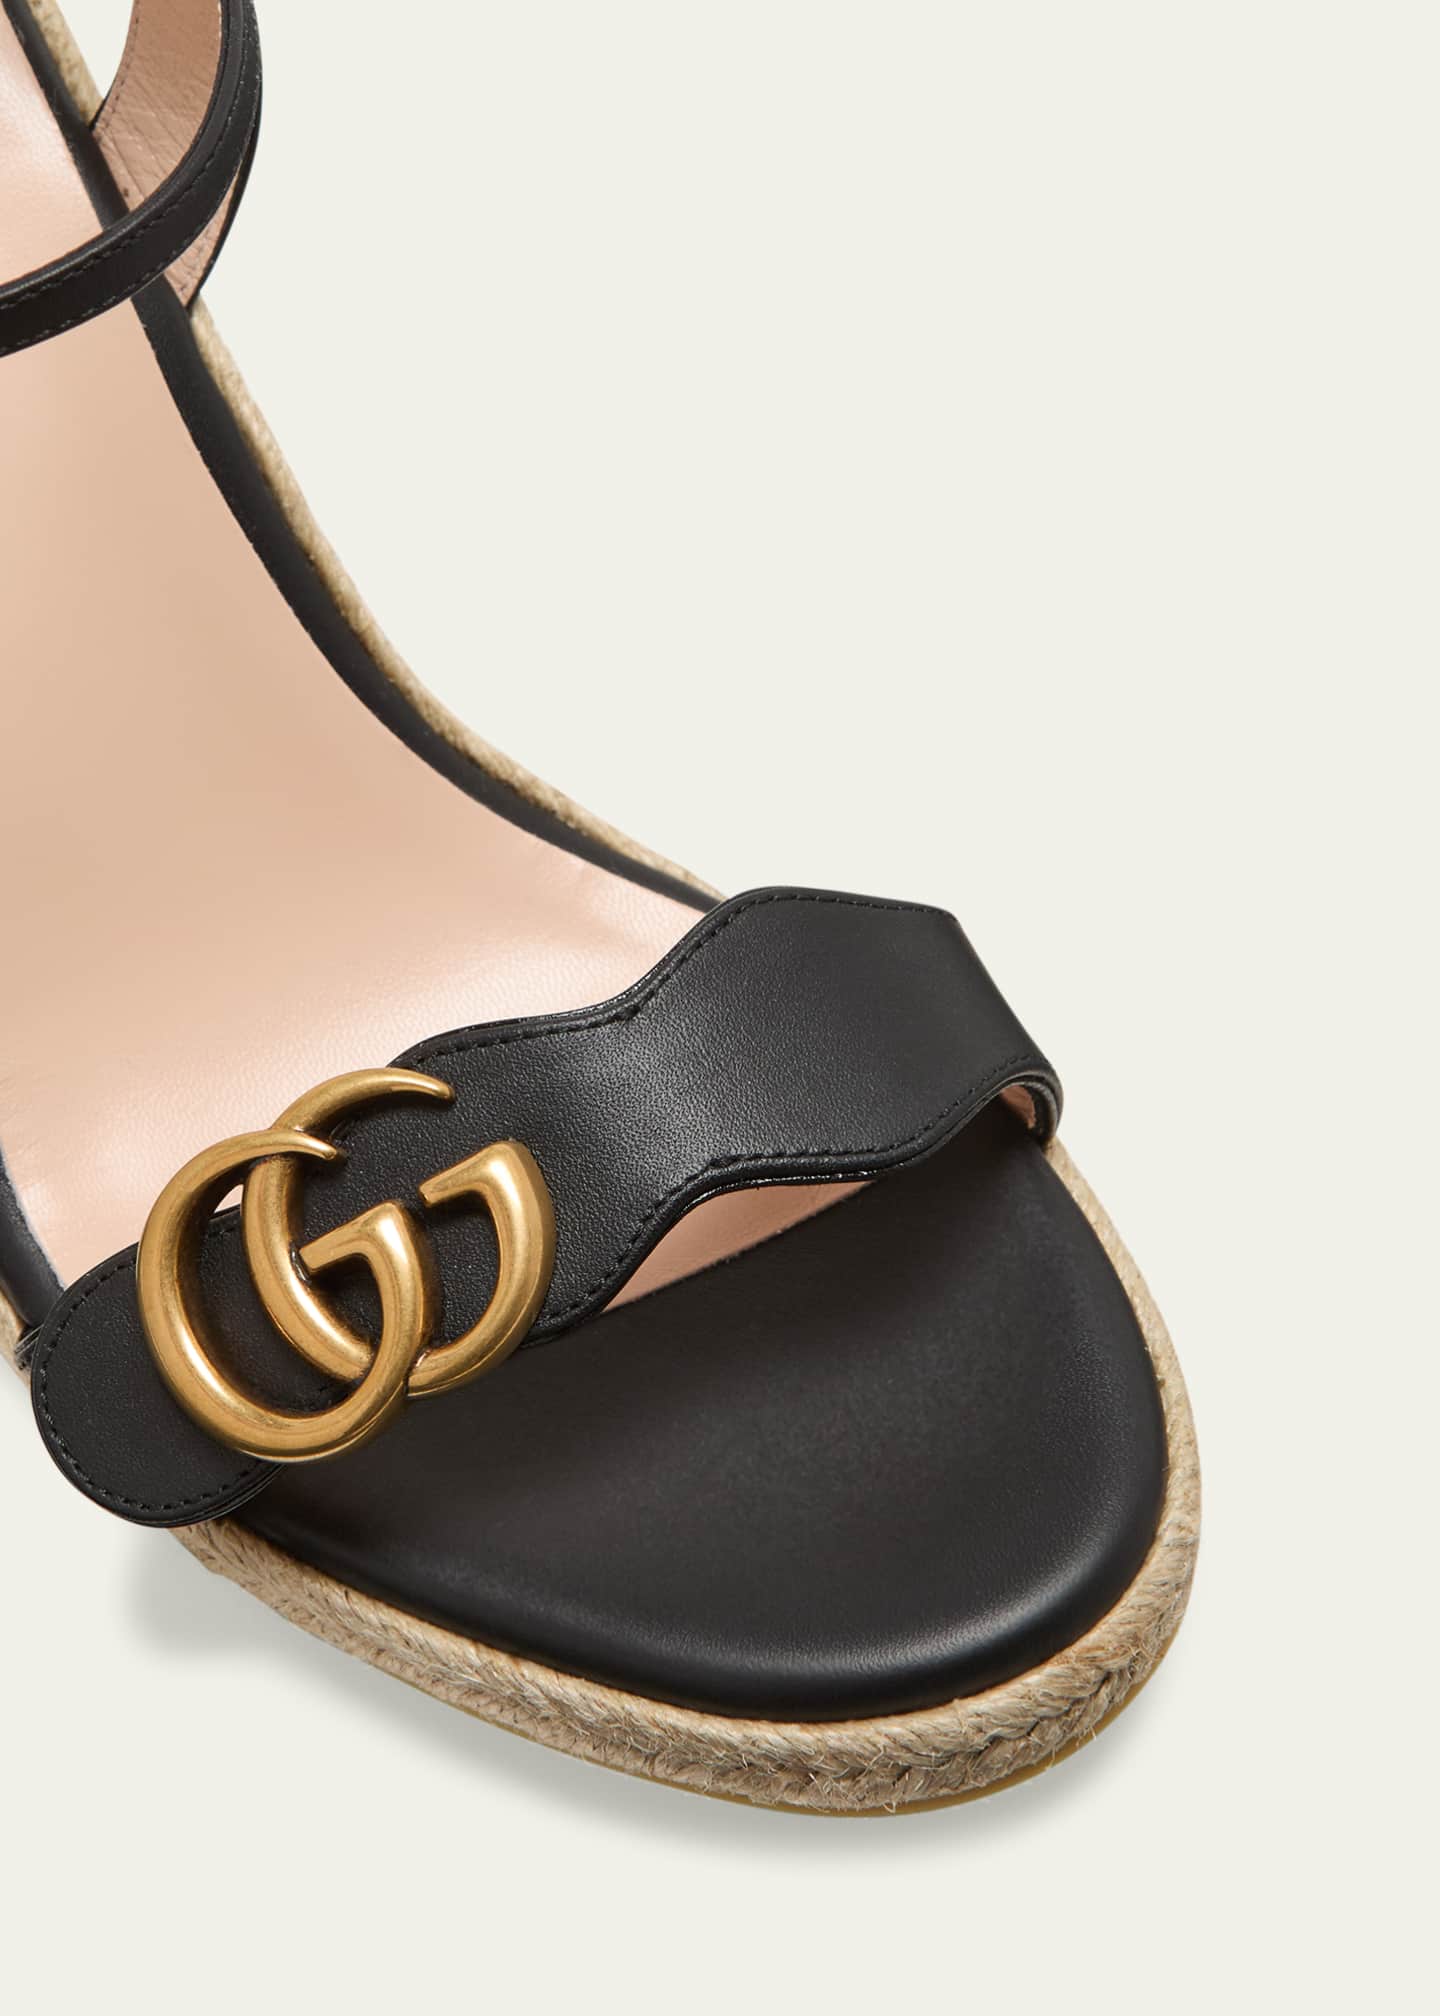 GUCCI Aitana logo-embellished leather wedge espadrille sandals